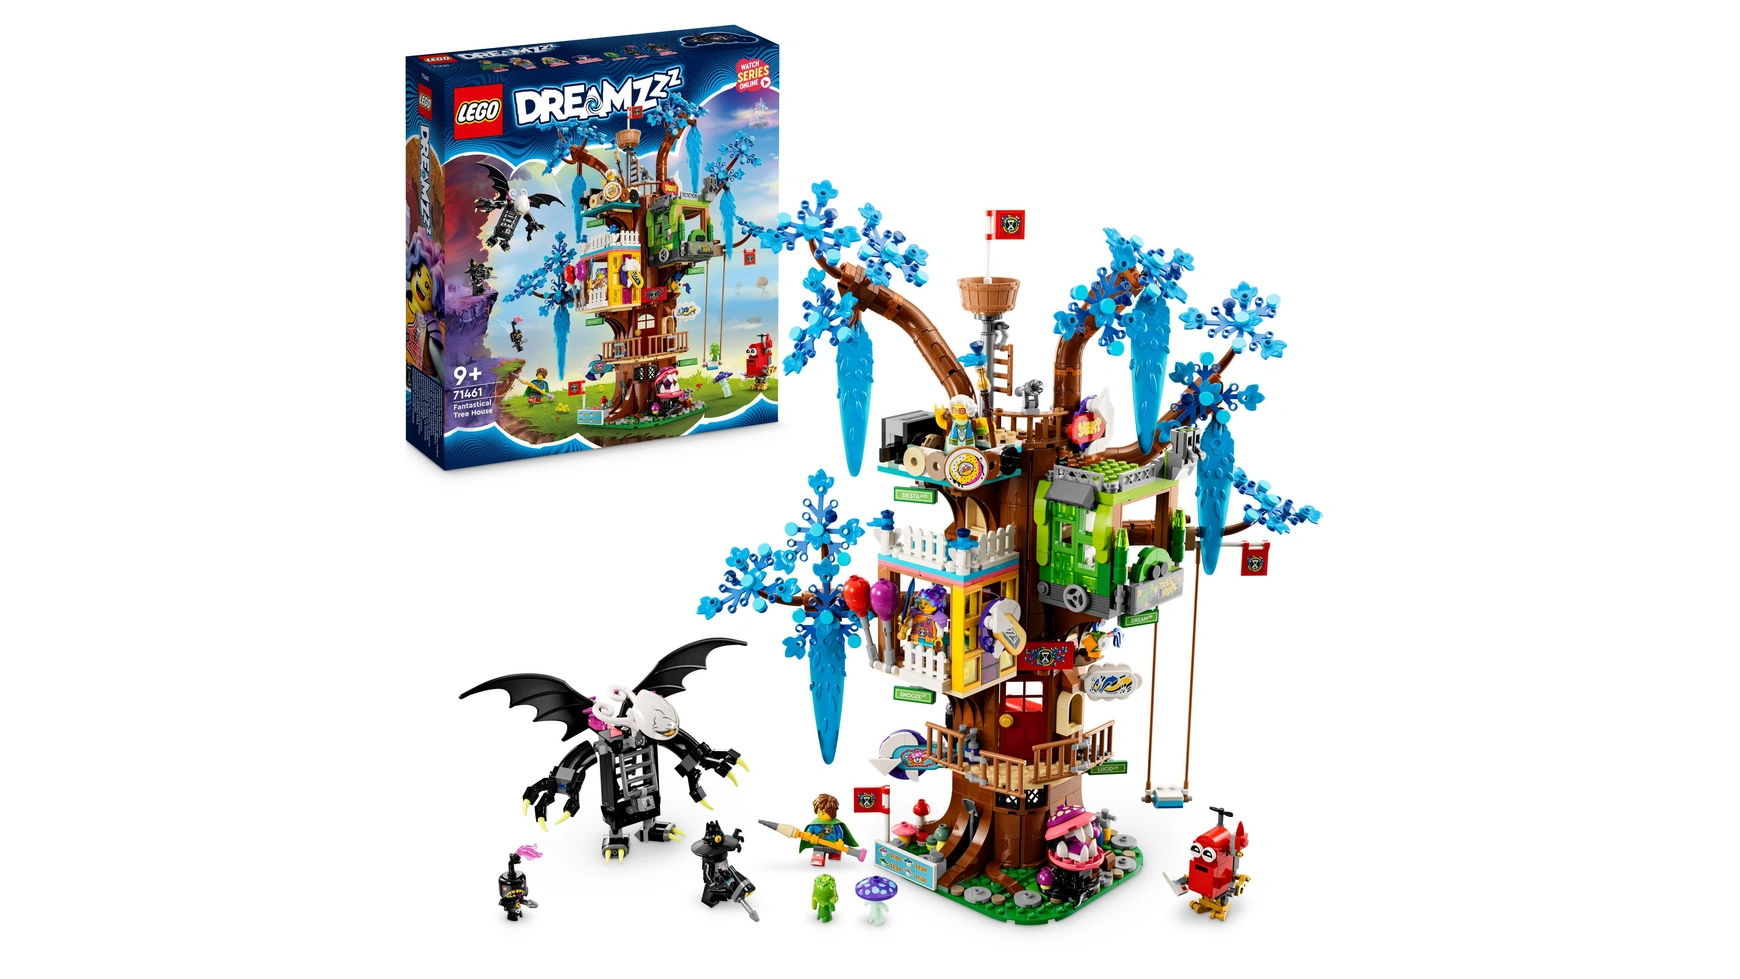 Lego DREAMZzz Фантастический домик на дереве, соберите 2 типа модели lego 31053 лего домик на дереве